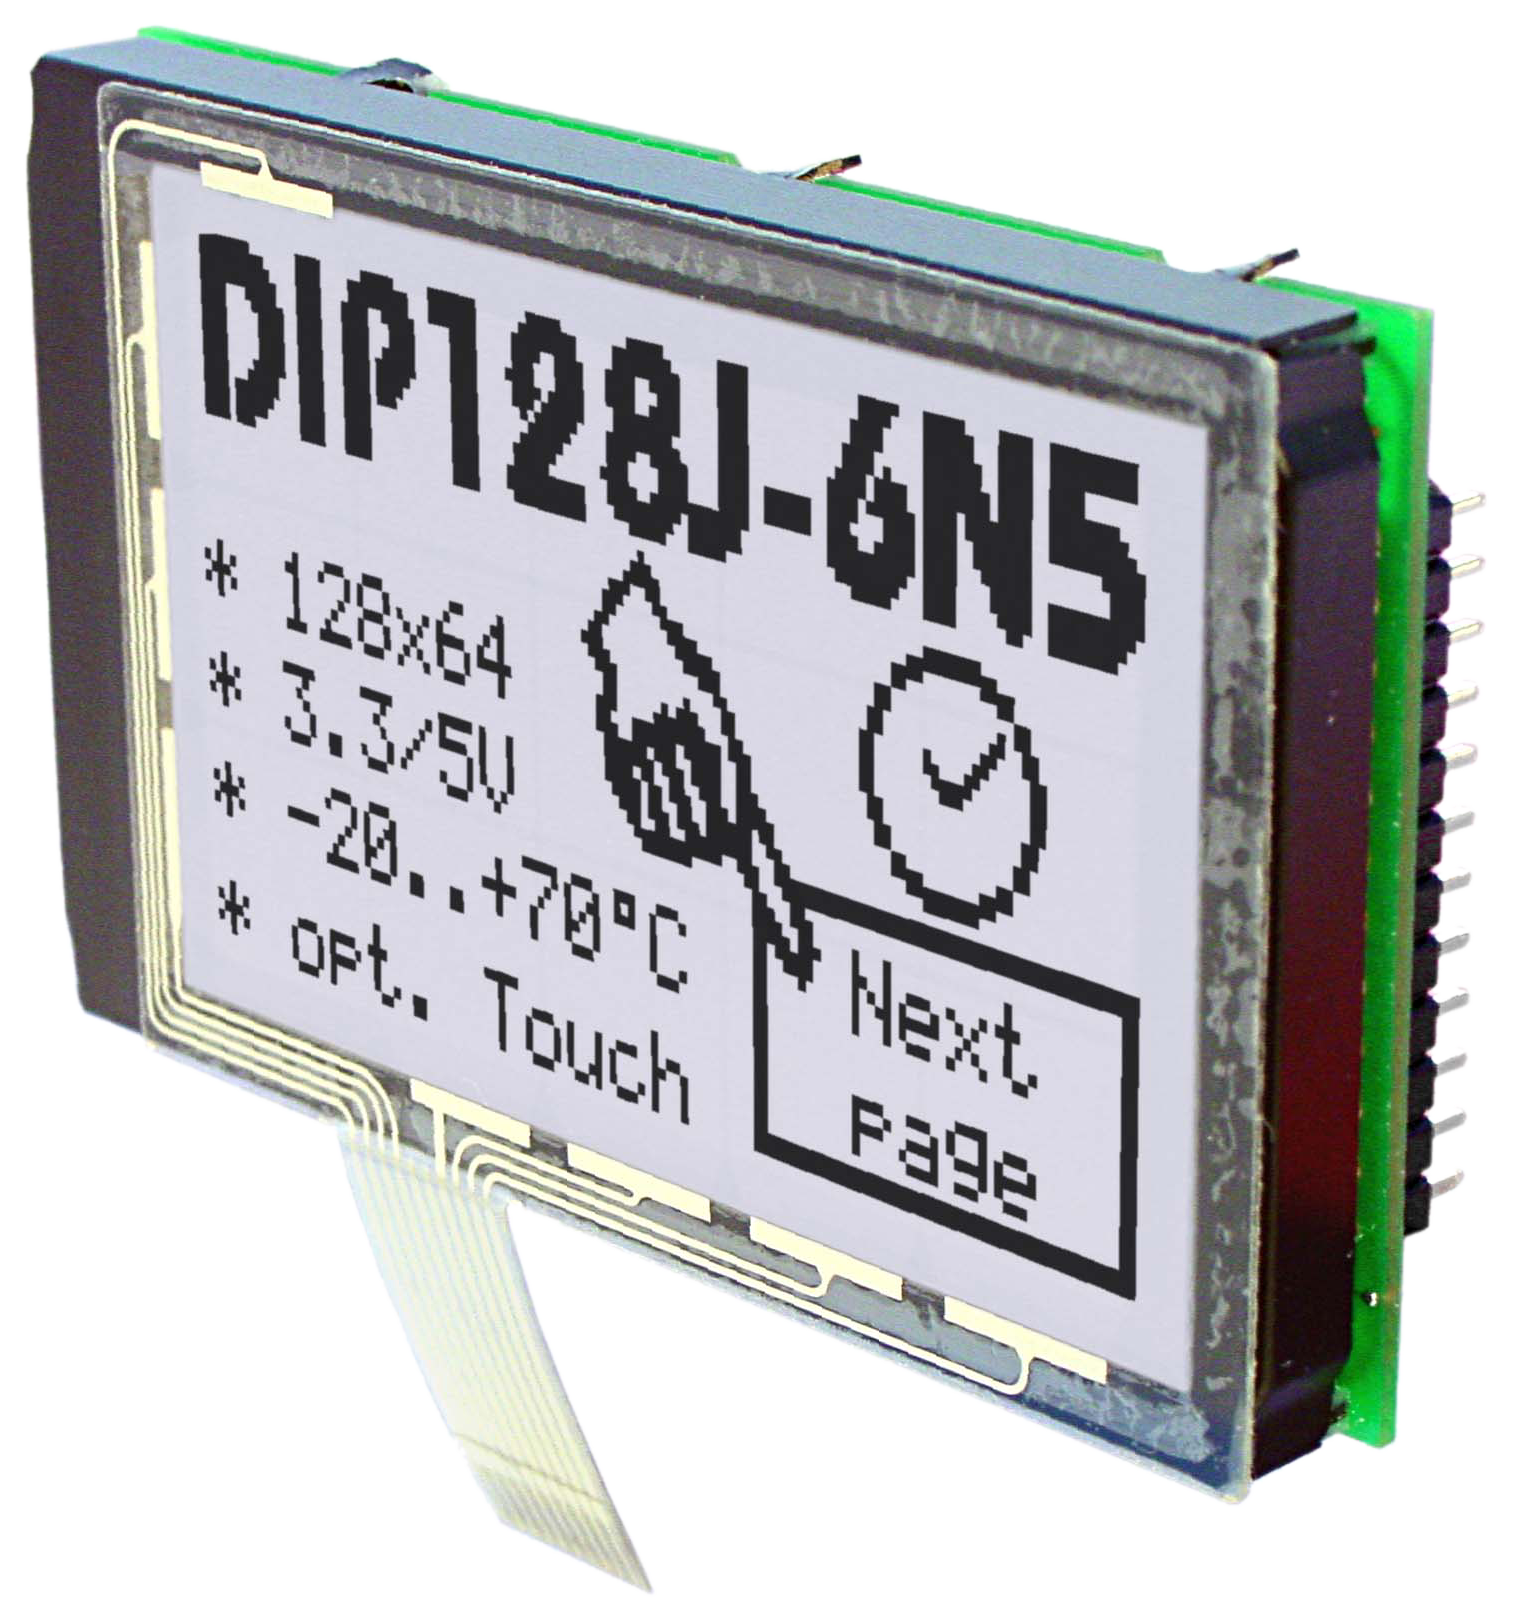 Displays Panels in Chip-on-Board (COB) TEchnik, hier EA DIP128 als Grafikdisplay mit 128x64 Pixeln